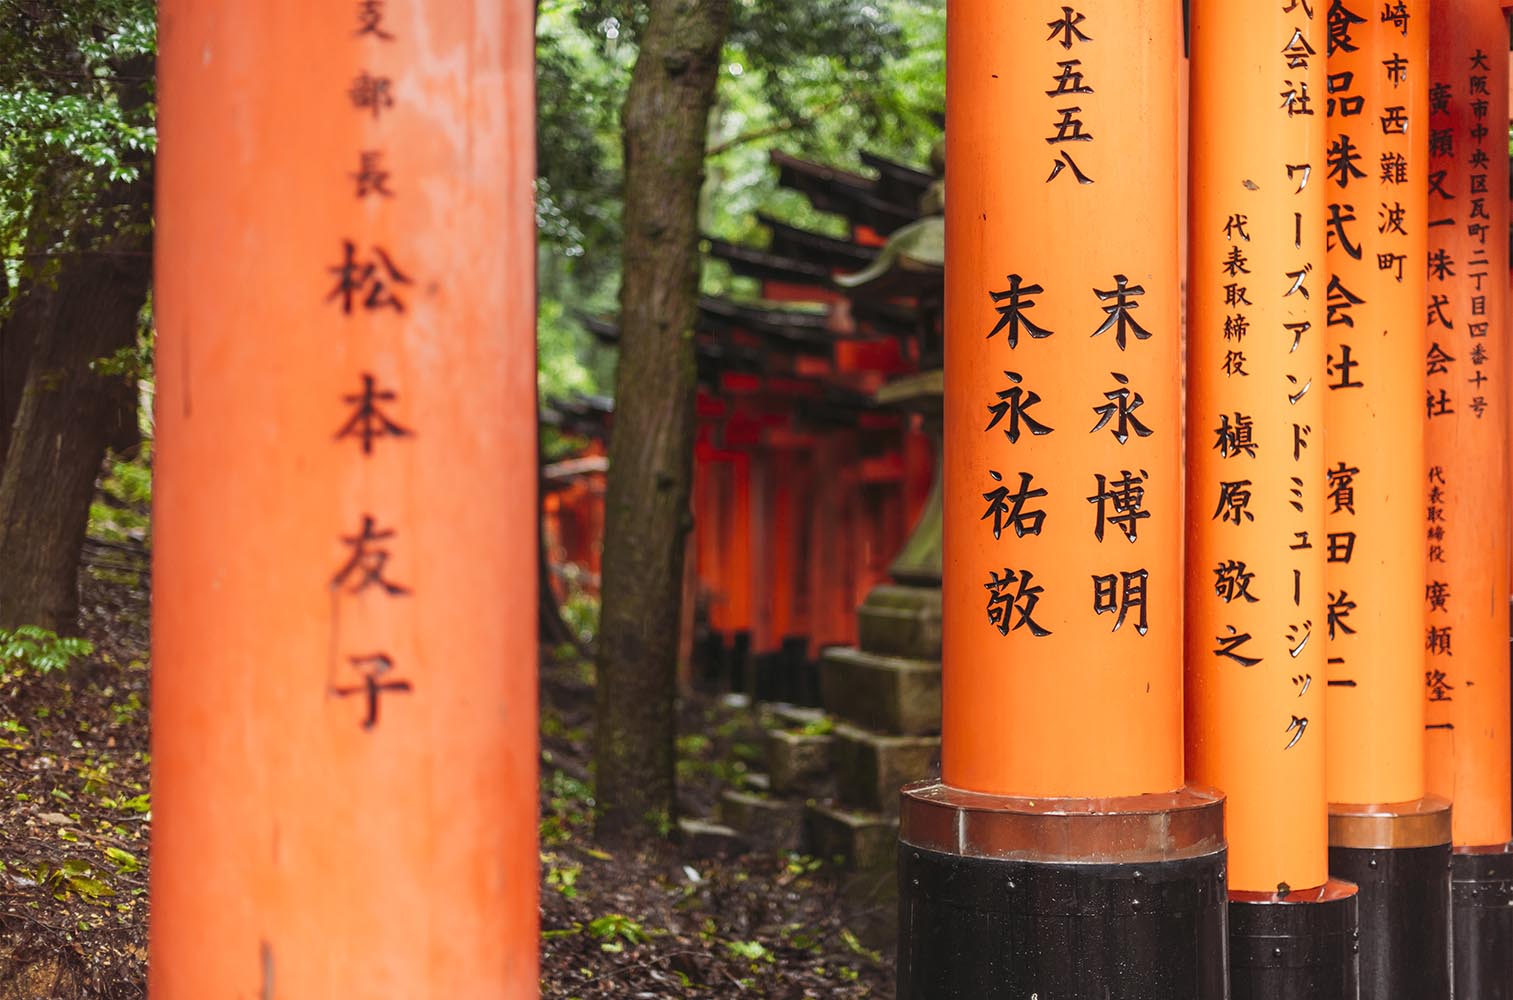 Torii gates of the Shinto sanctuary of Fushimi Inari Taisha, in